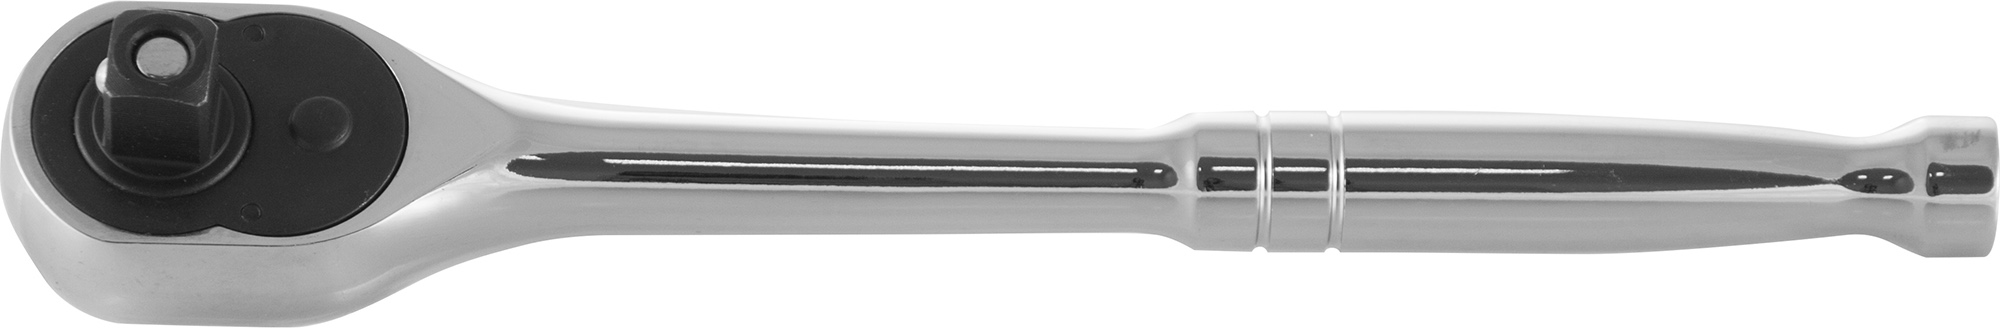 Ключ трещоточный   1/4DR 72 зубца Ombra мет.ручка